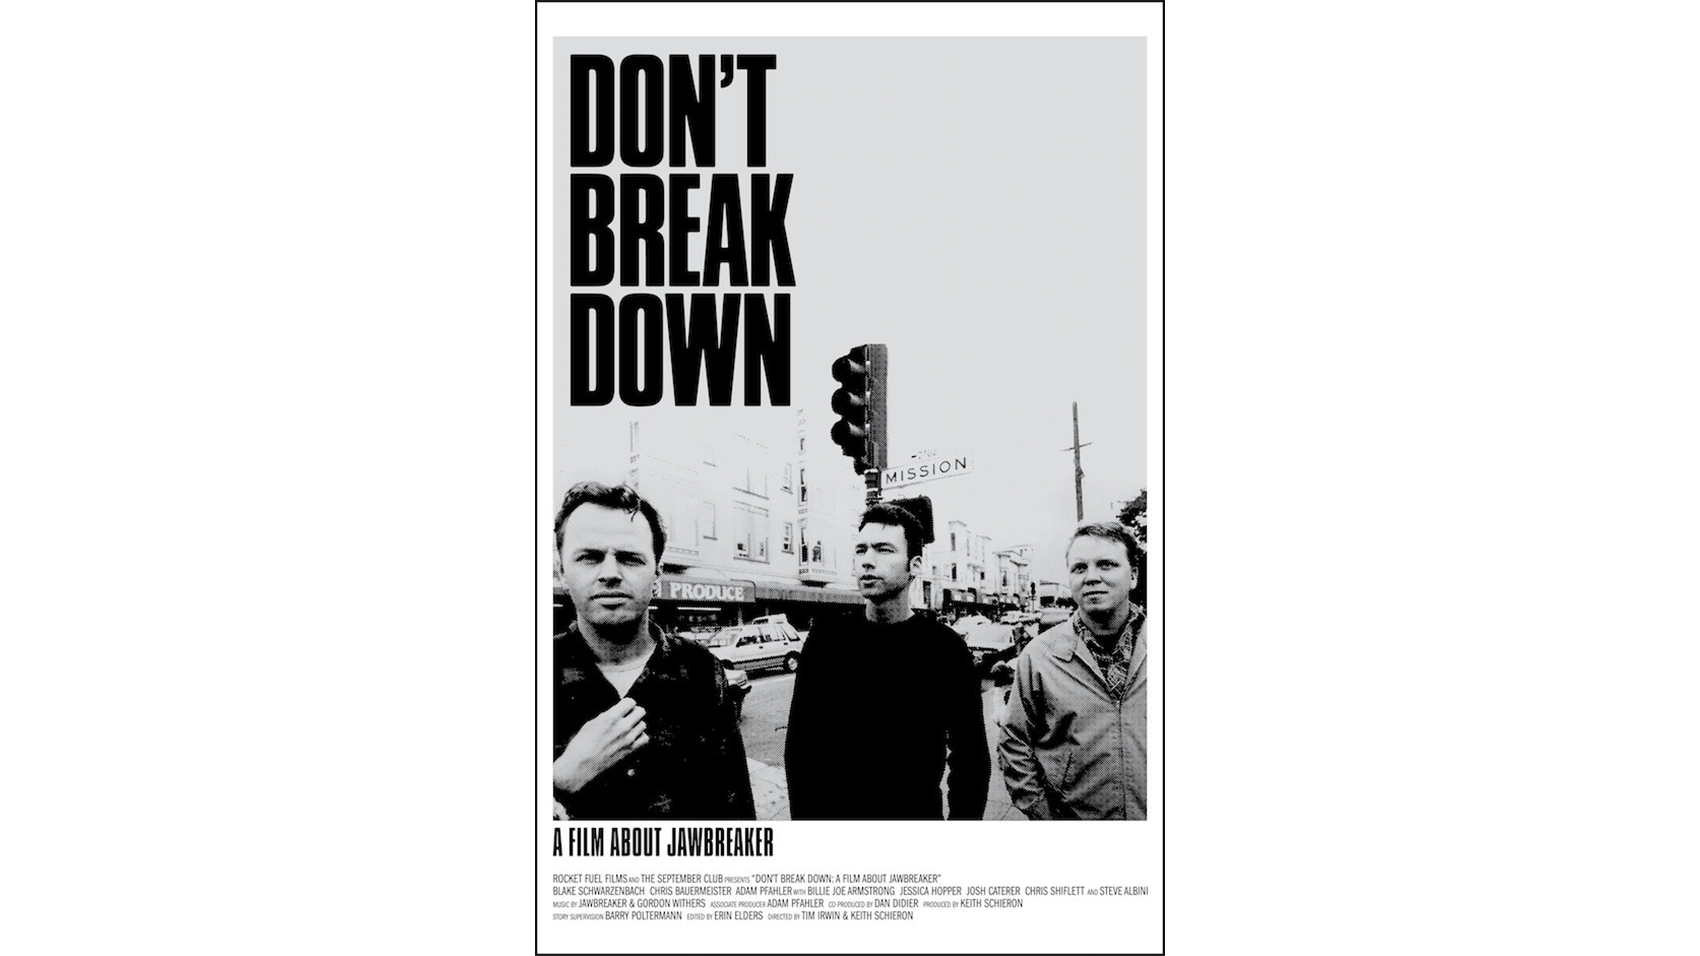 Breakdown Breakdown Break Break down Song. Heeeey Break and down. Dont broke